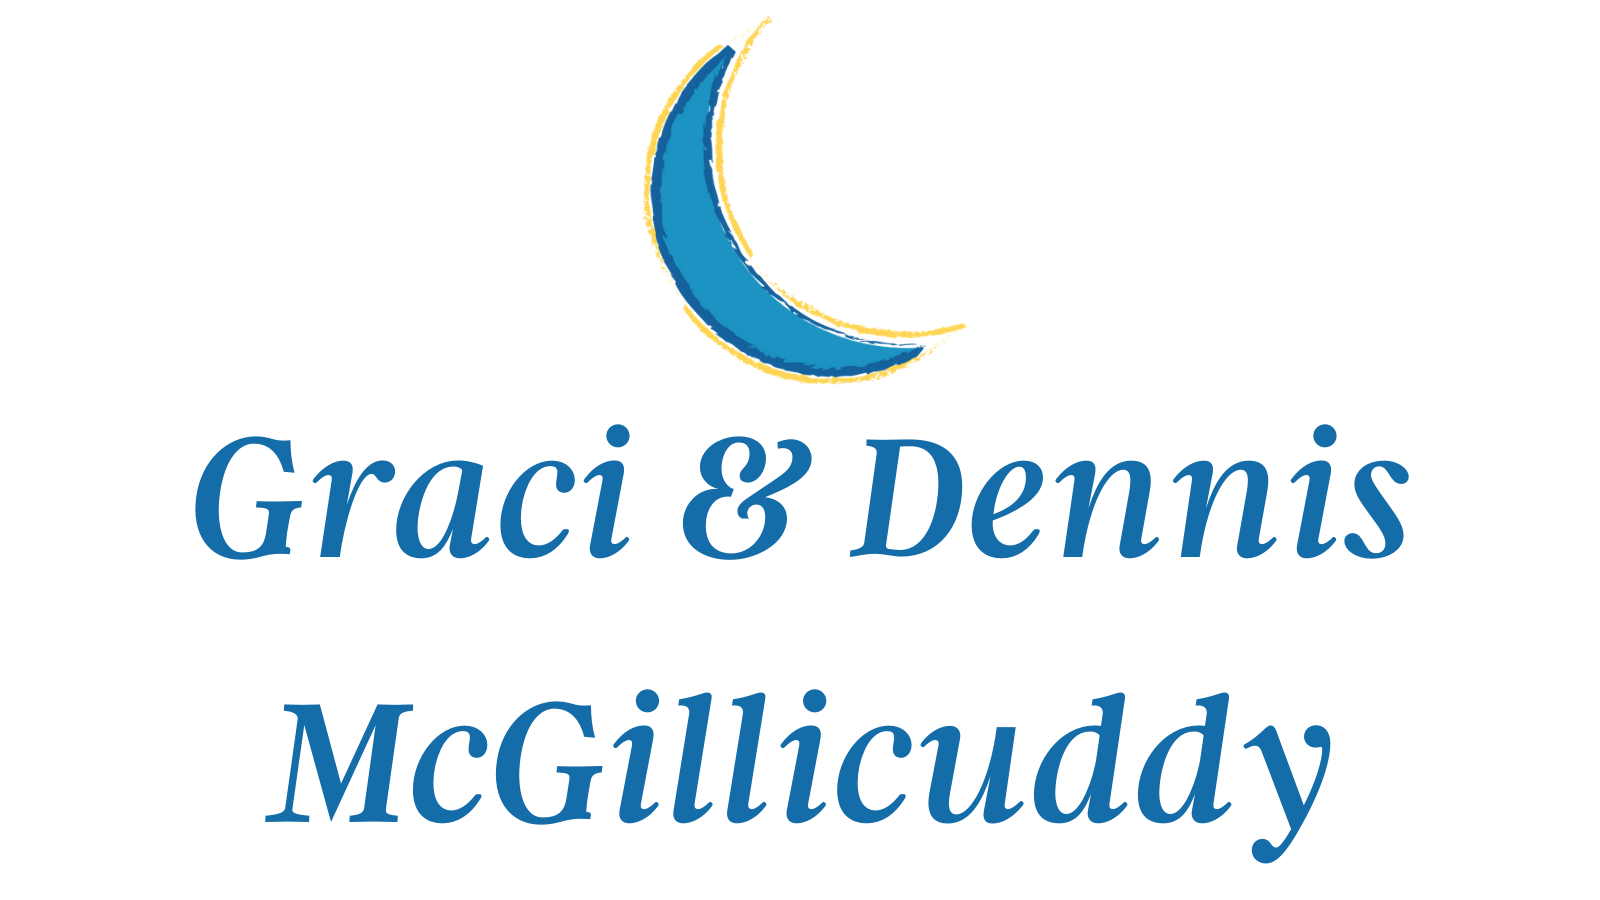 Graci & Dennis McGillicuddy